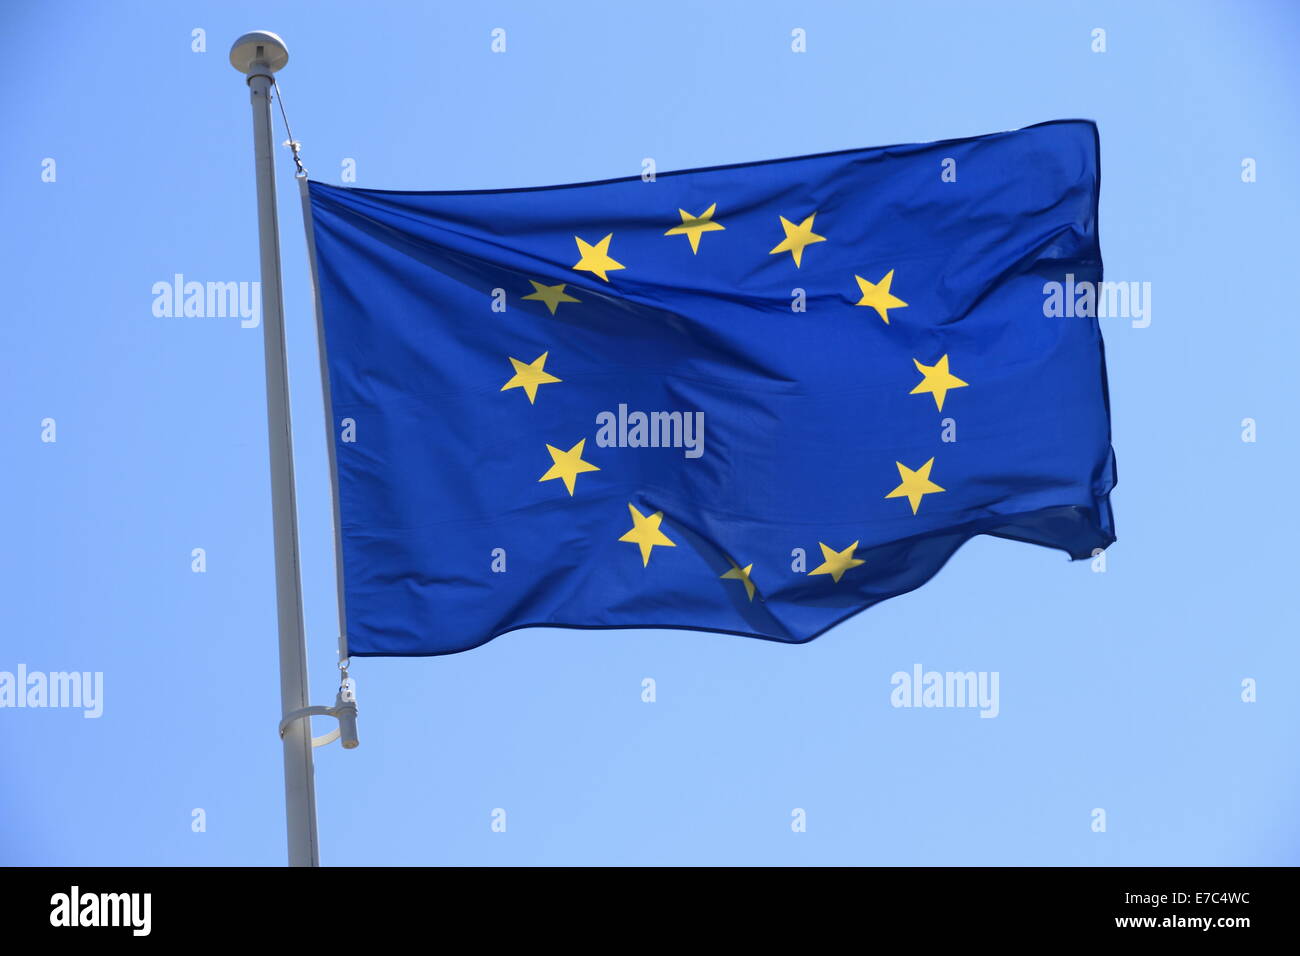 European flag with twelve yellow stars on blue sky, horizontal Stock Photo